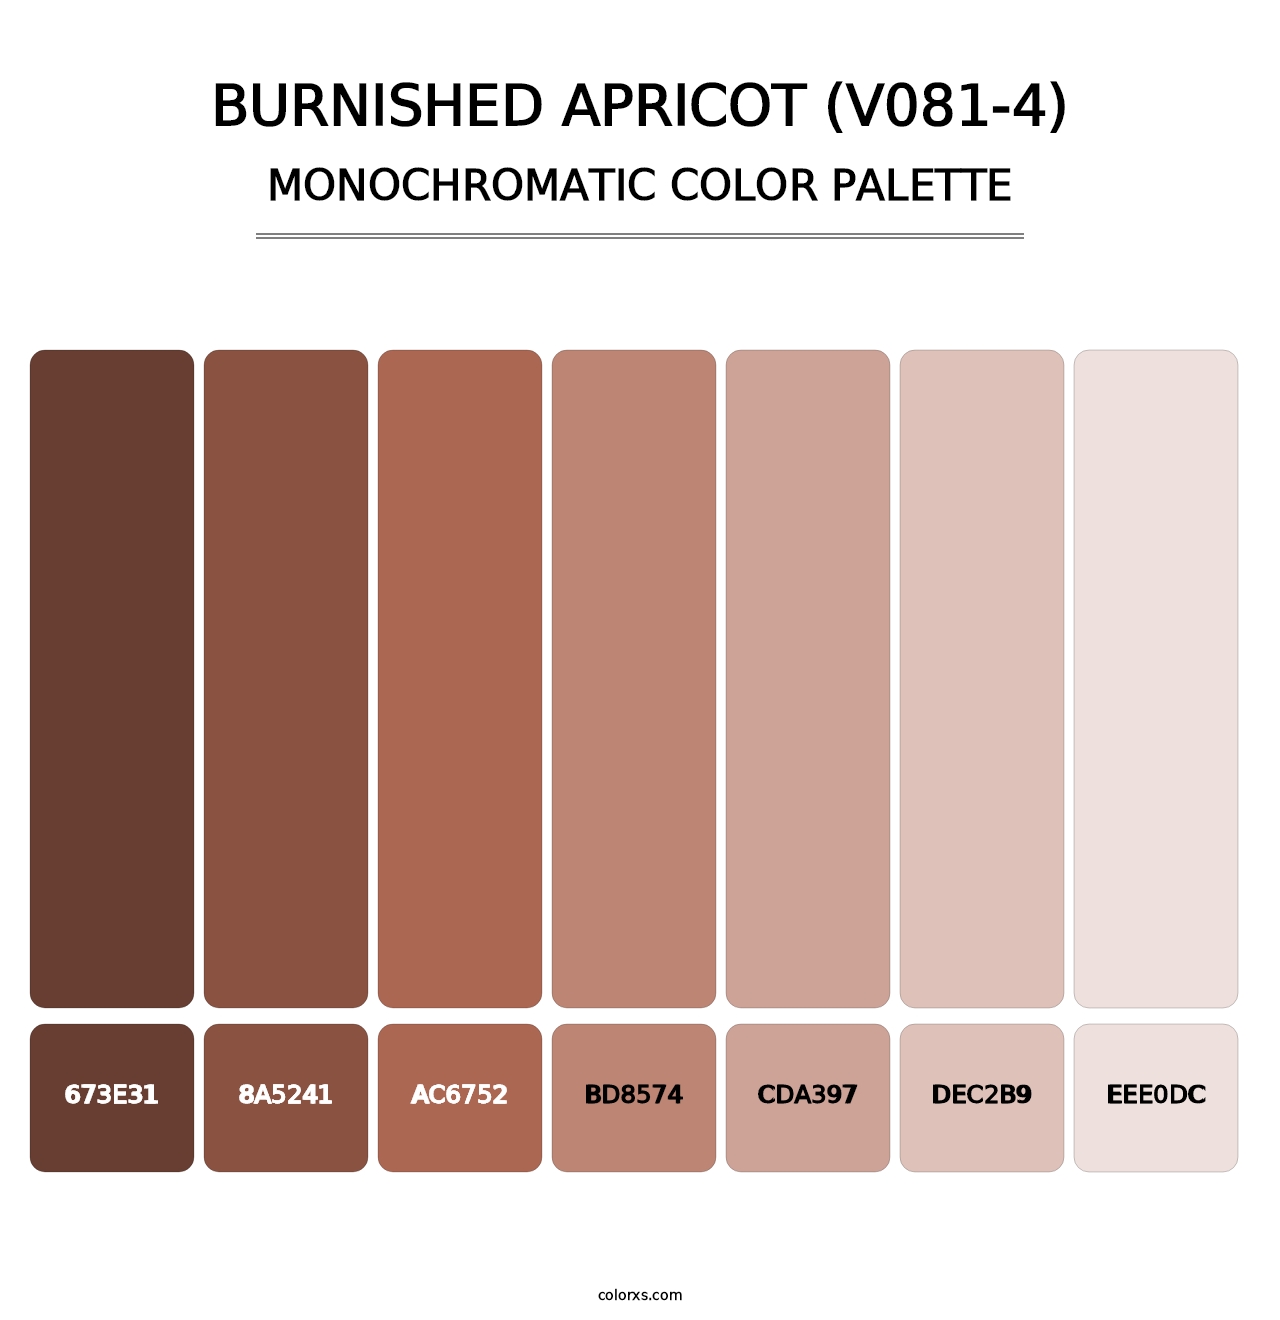 Burnished Apricot (V081-4) - Monochromatic Color Palette